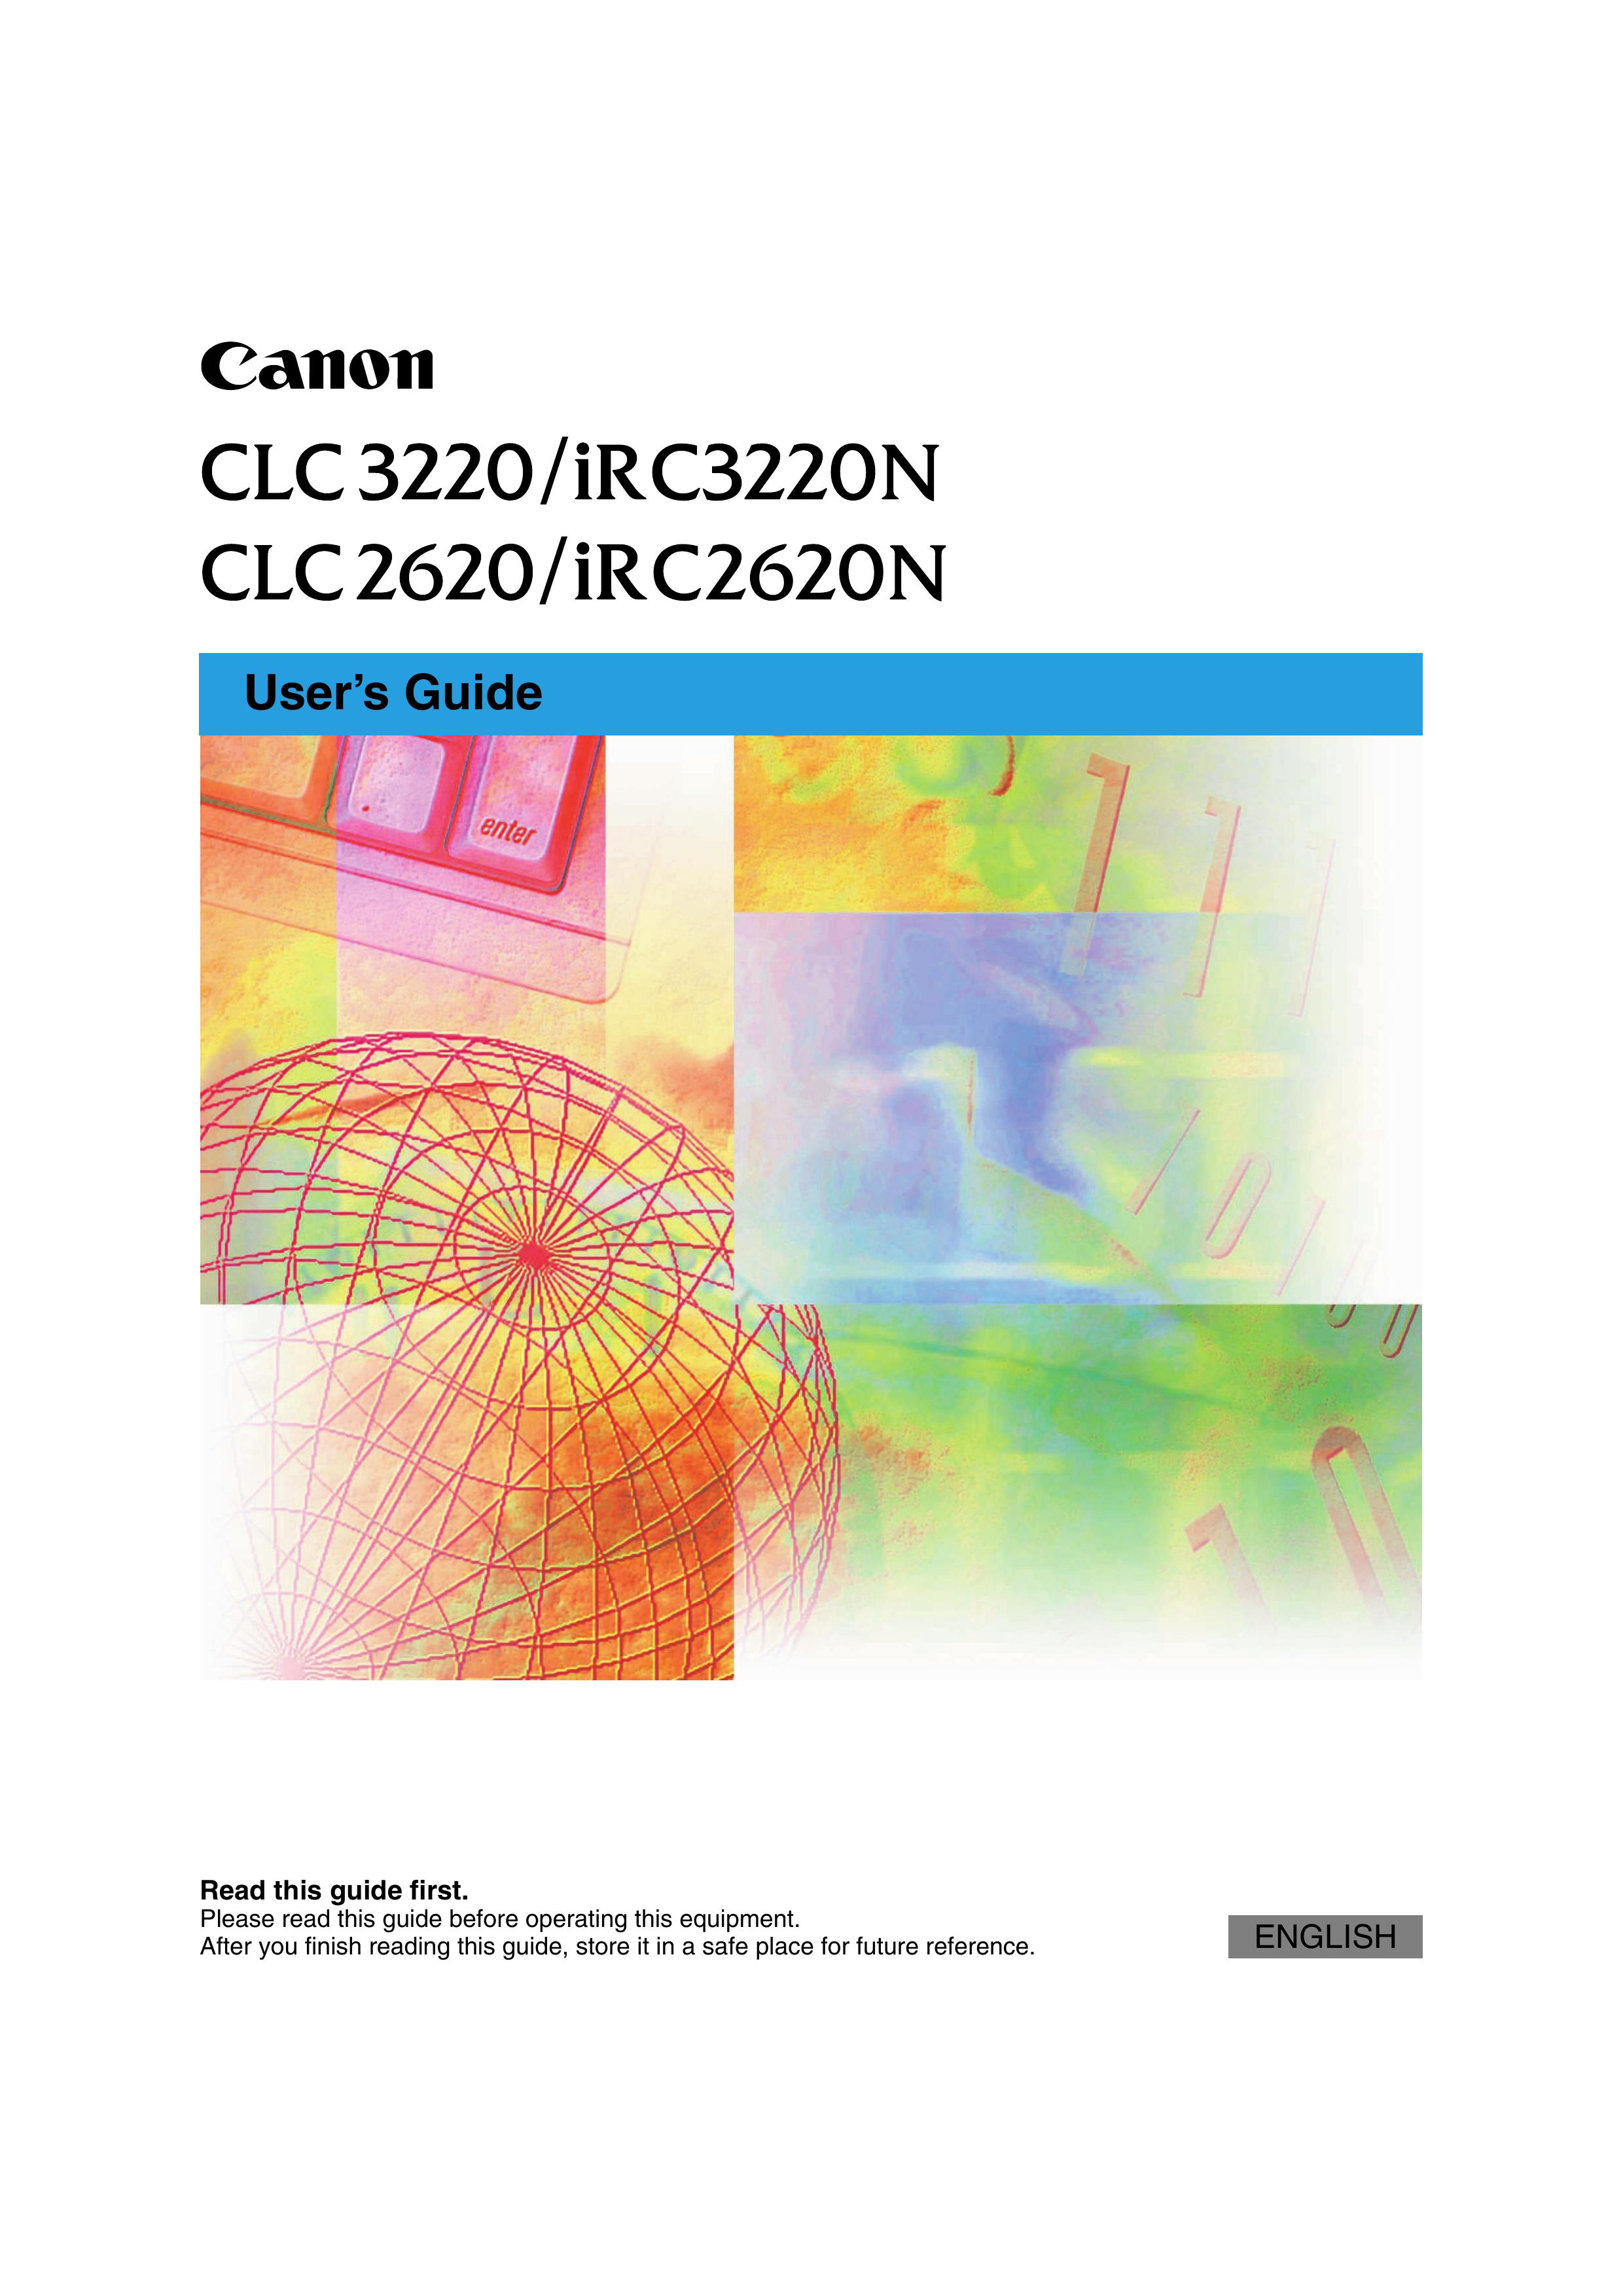 Canon CLC2620 Photo Printer User Manual